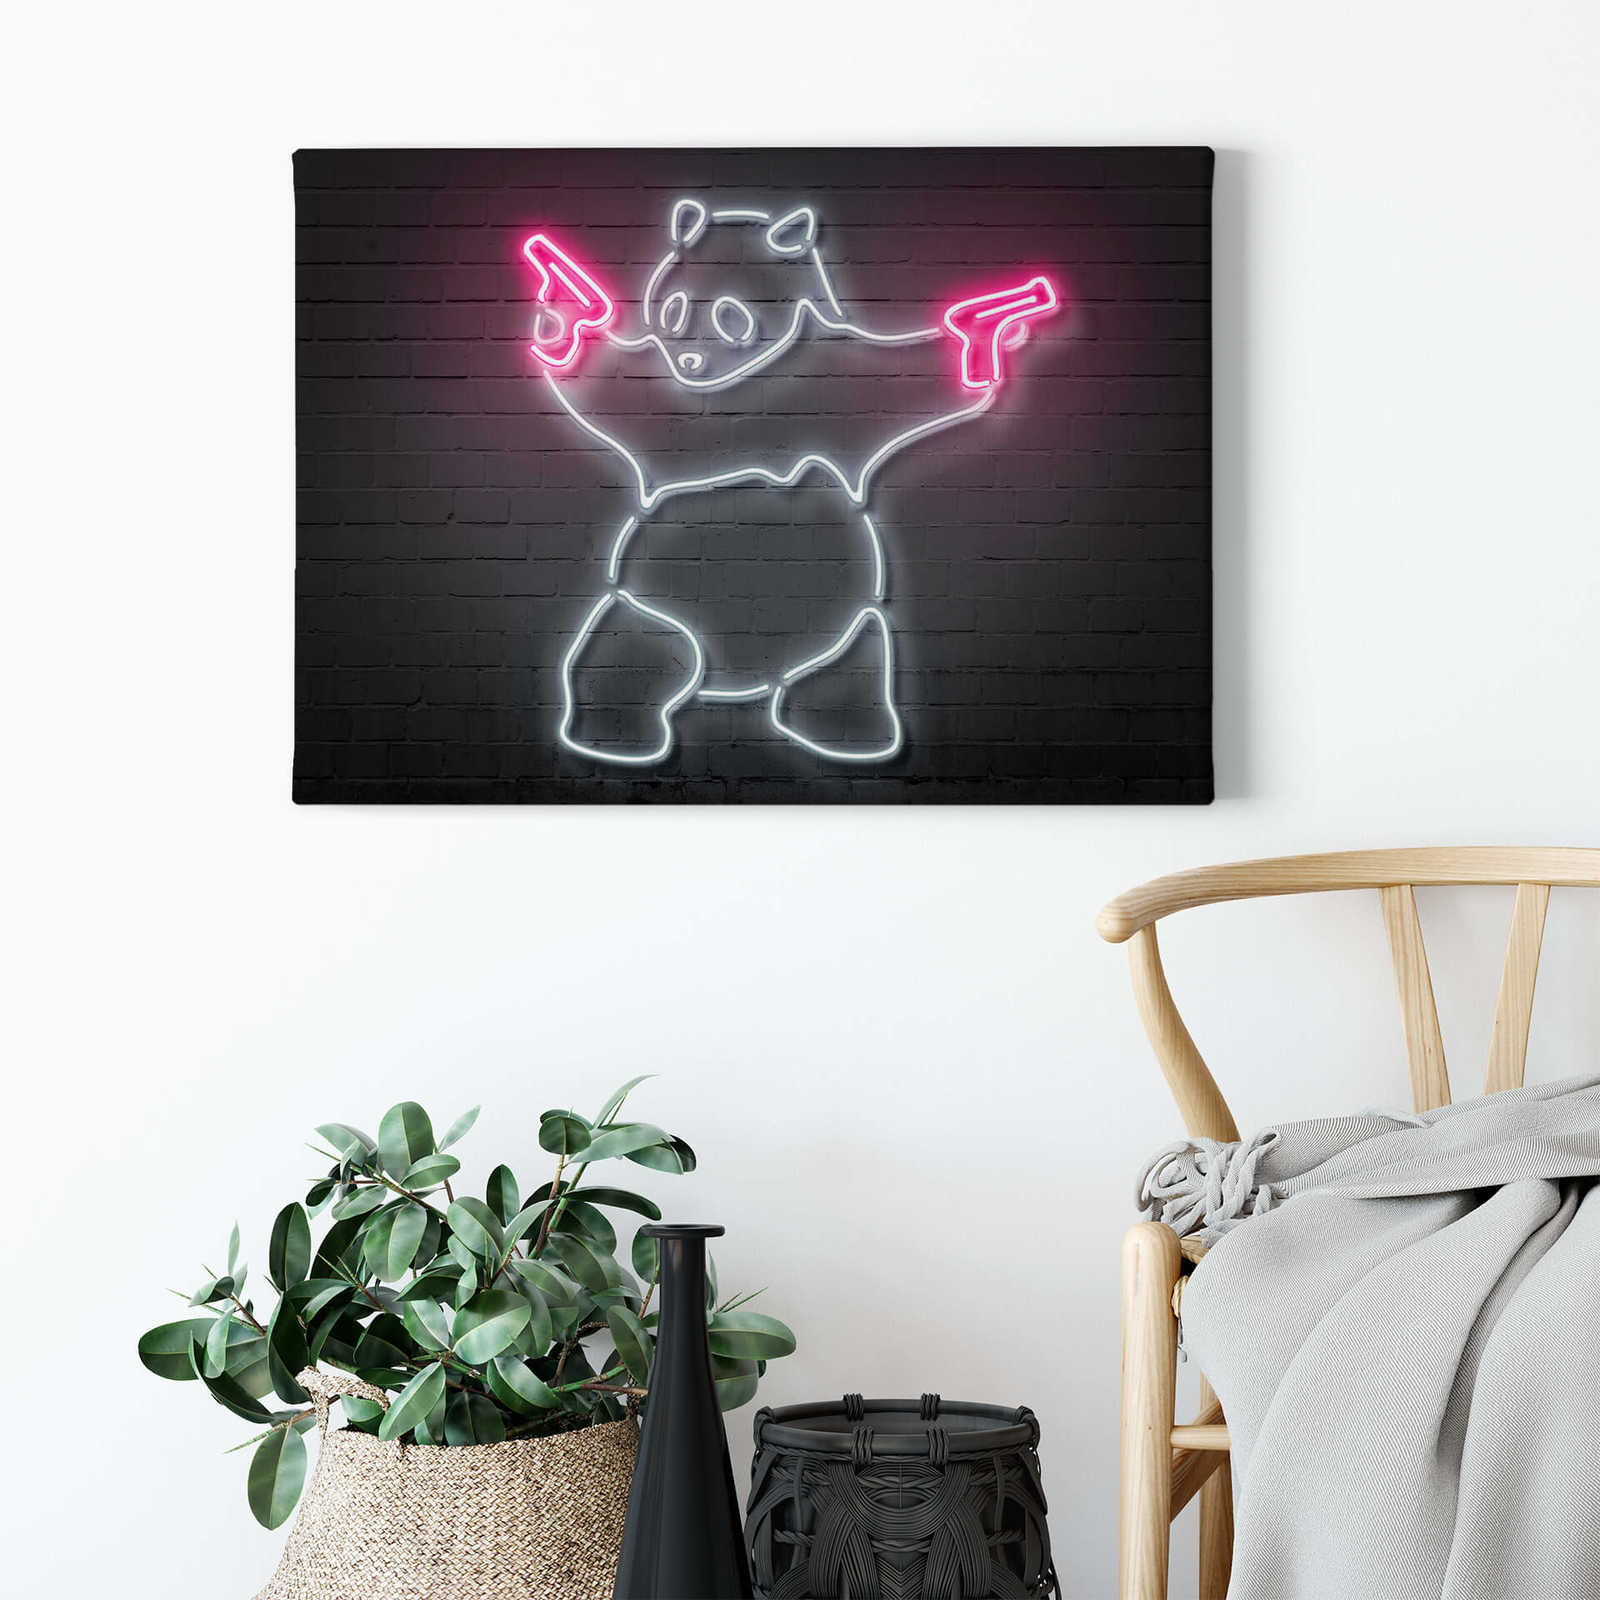             Canvas print neon sign "Panda" by Mielu
        